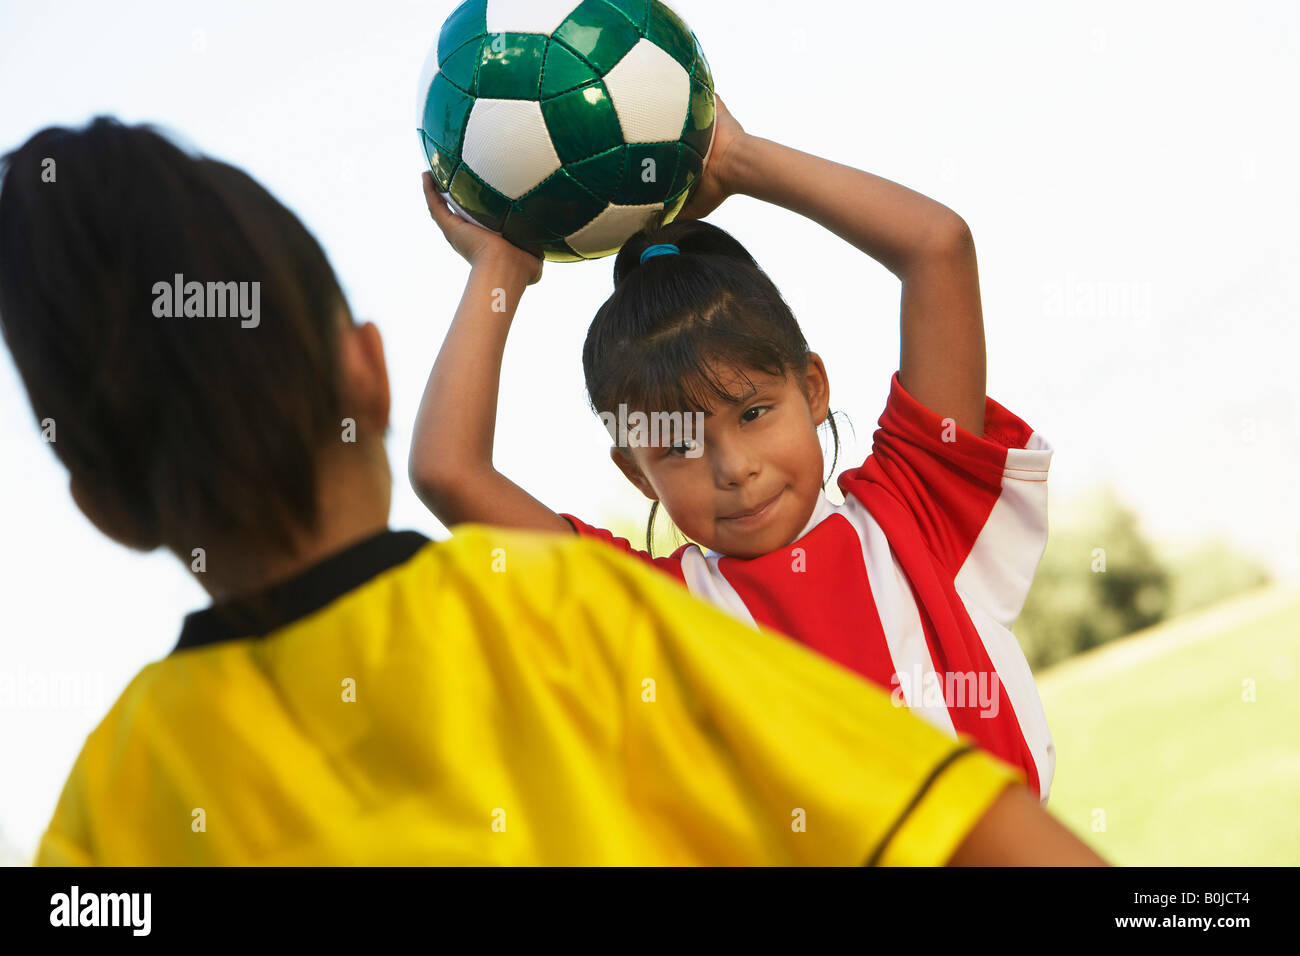 Girl soccer player (7-9 years) preparing to throw ball Stock Photo